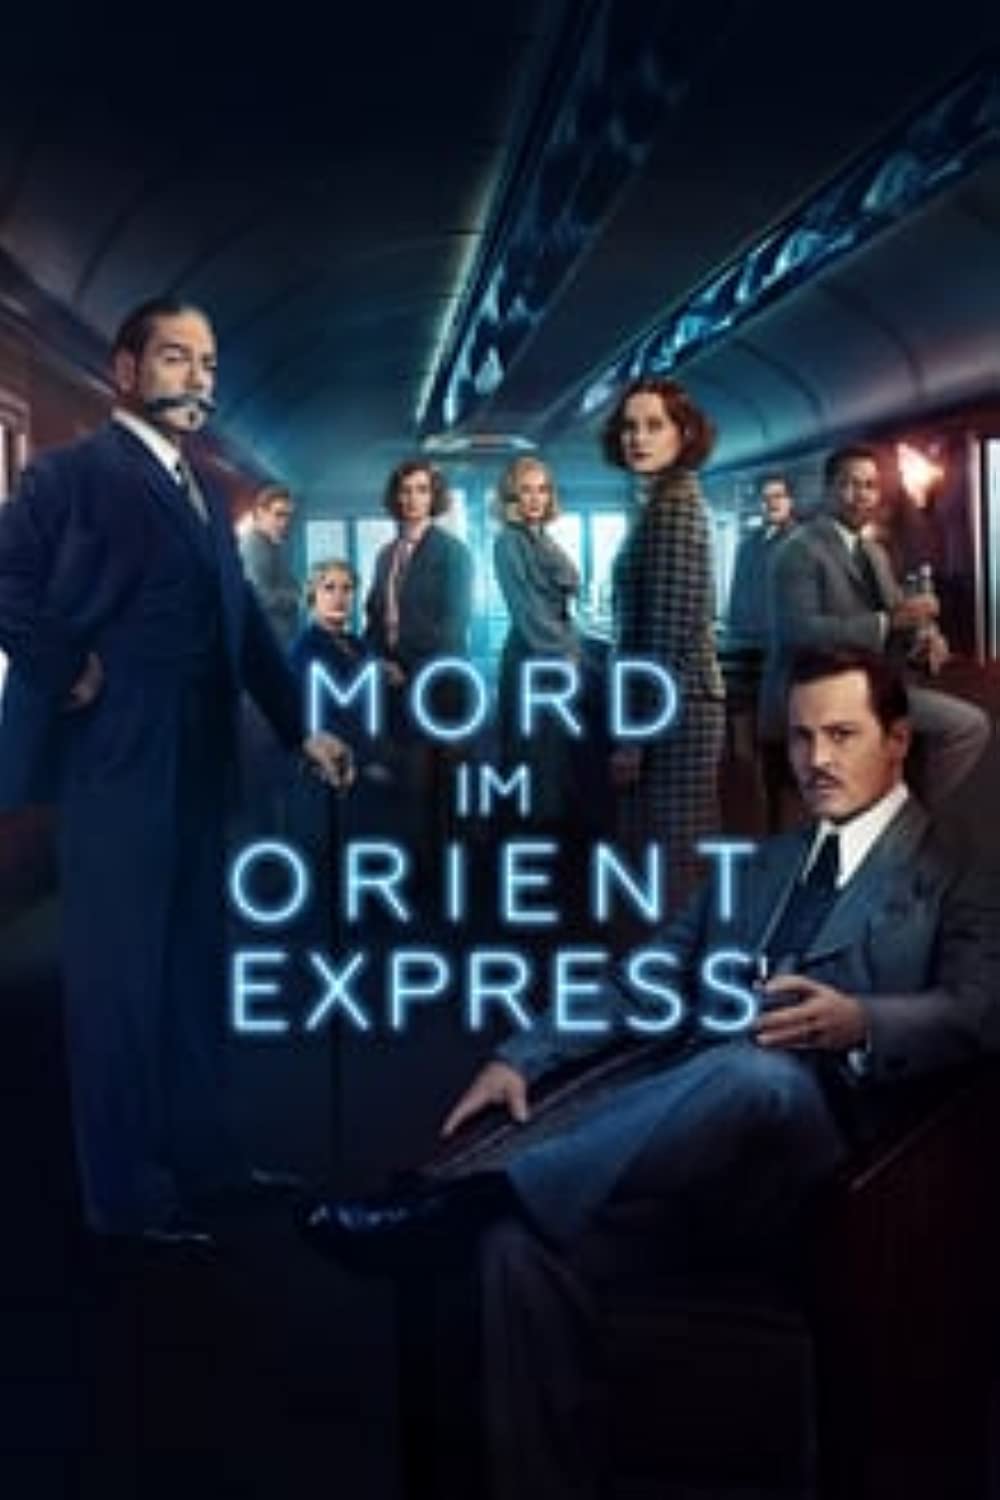 Filmbeschreibung zu Murder on the Orient Express